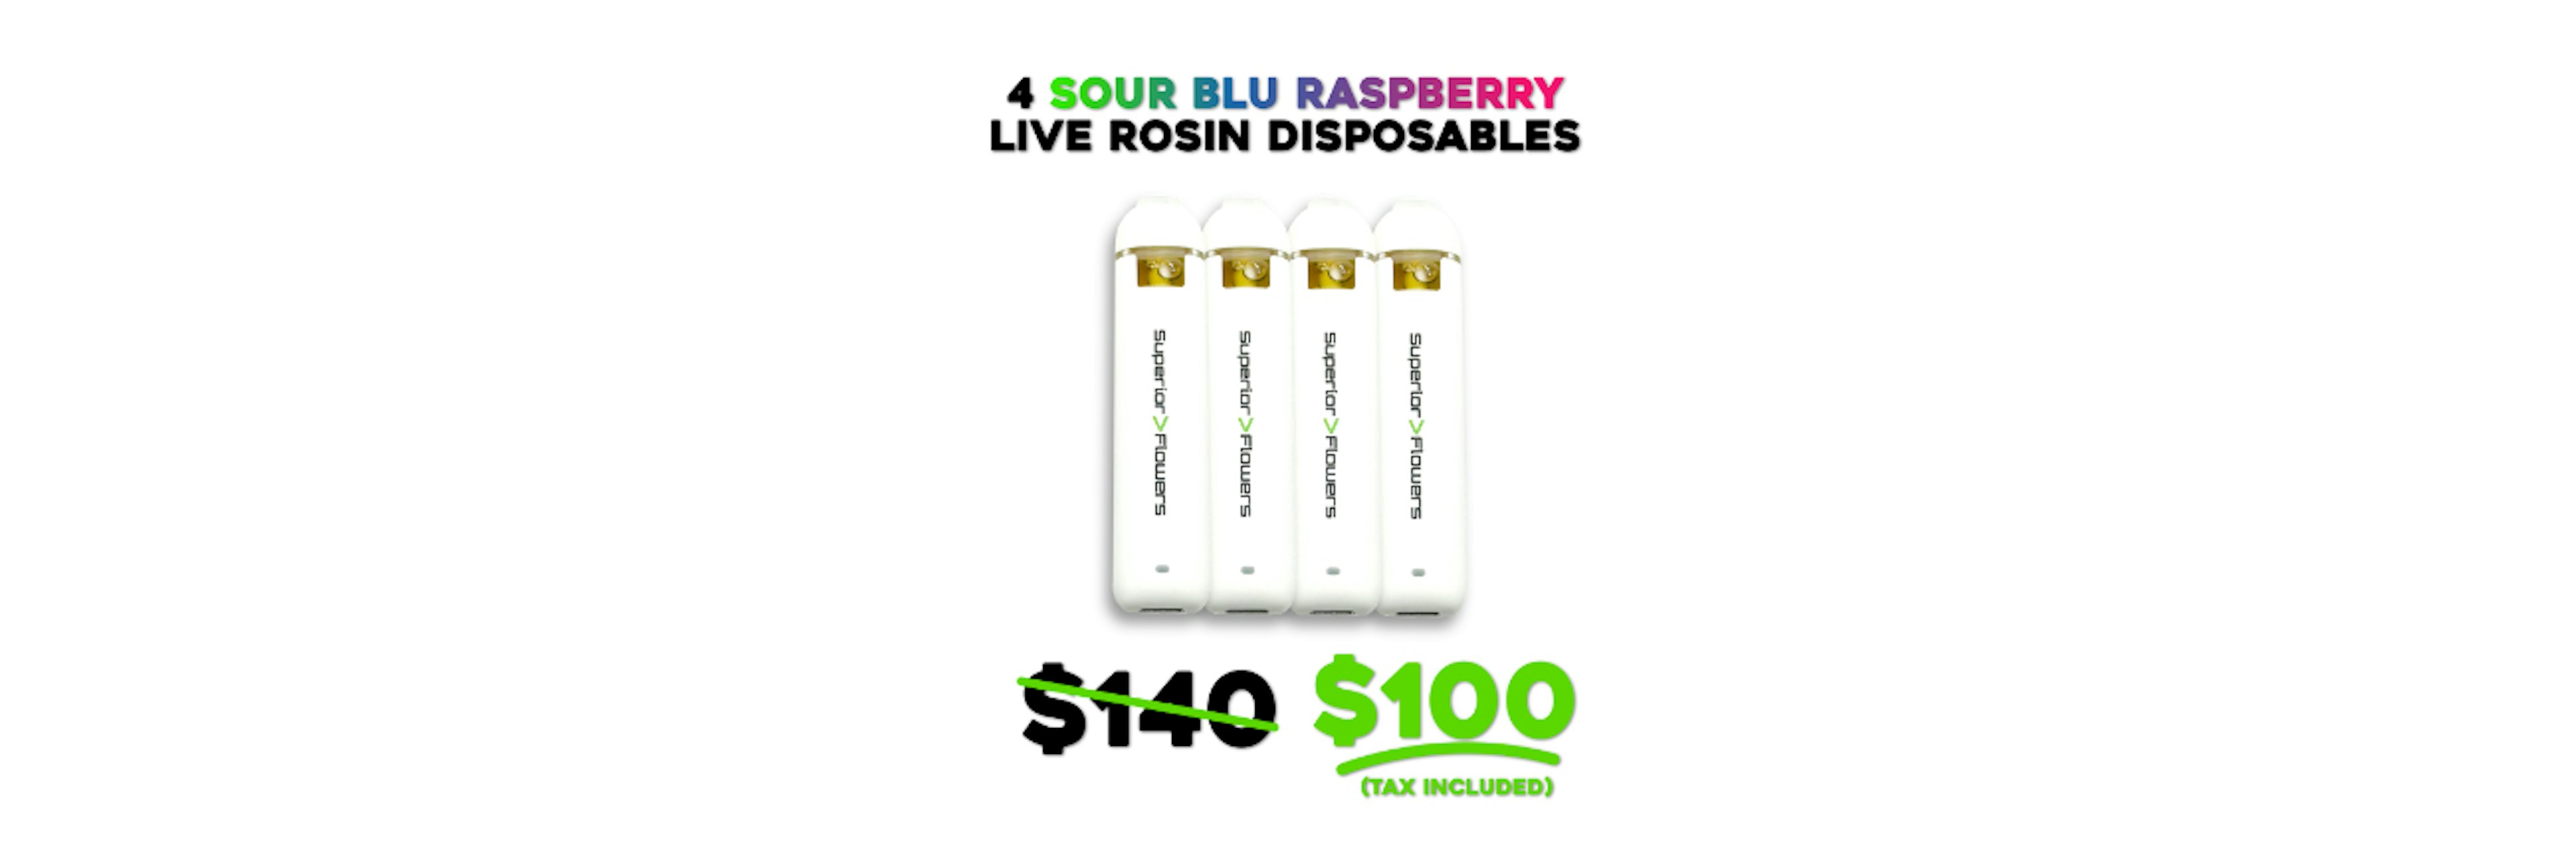 4 for $100 Sour Blu Raspberry